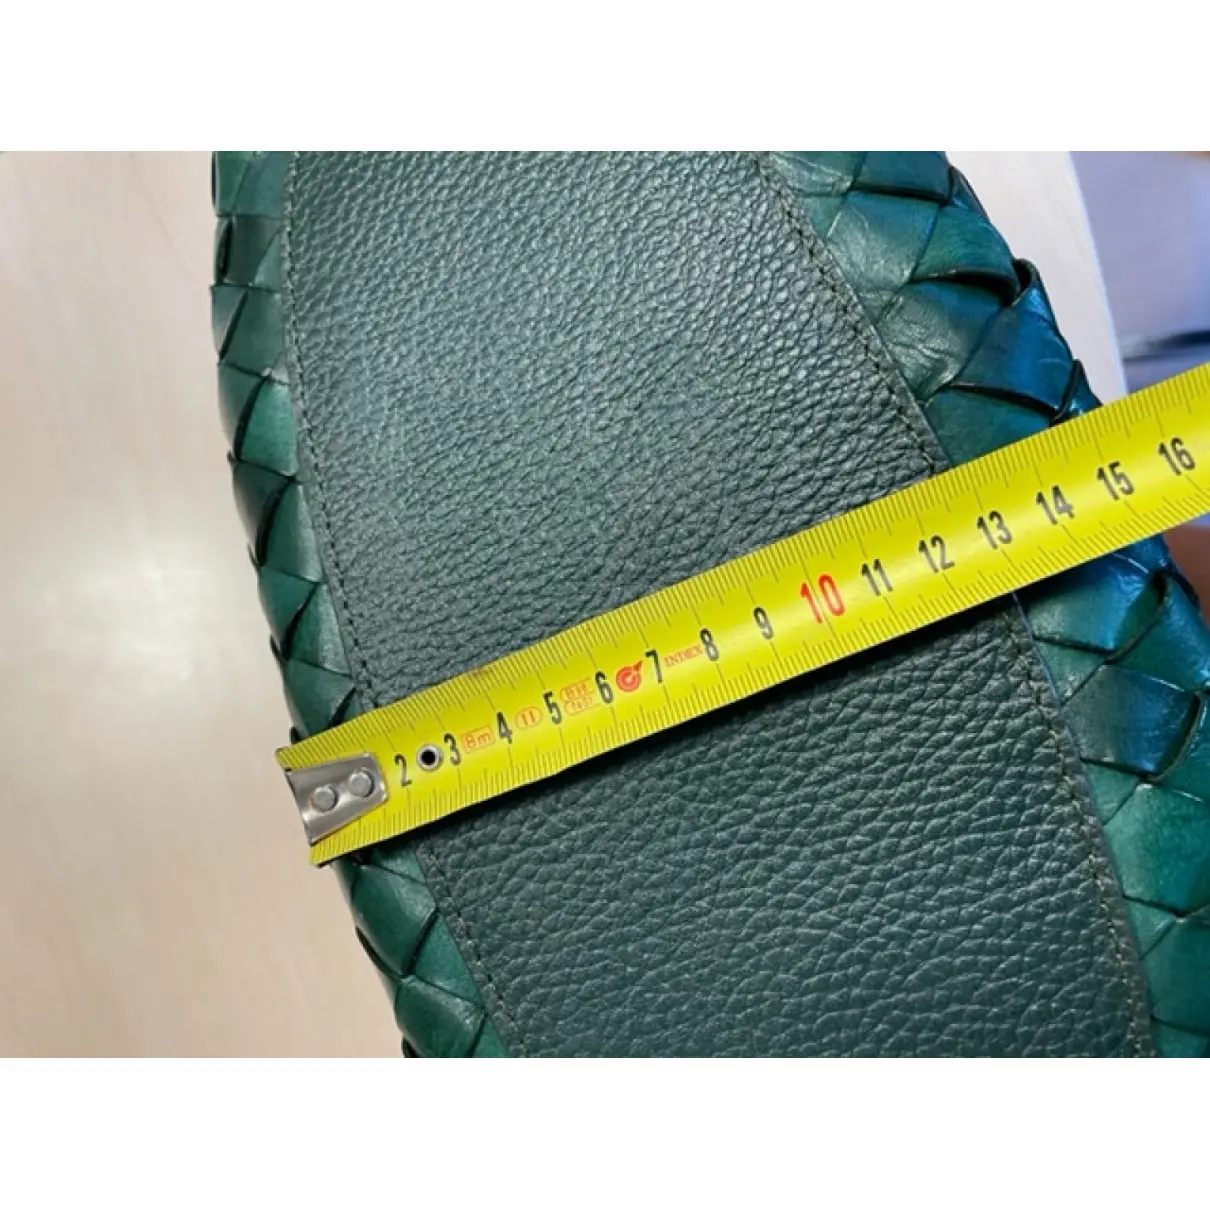 Leather handbag Dragon Diffusion